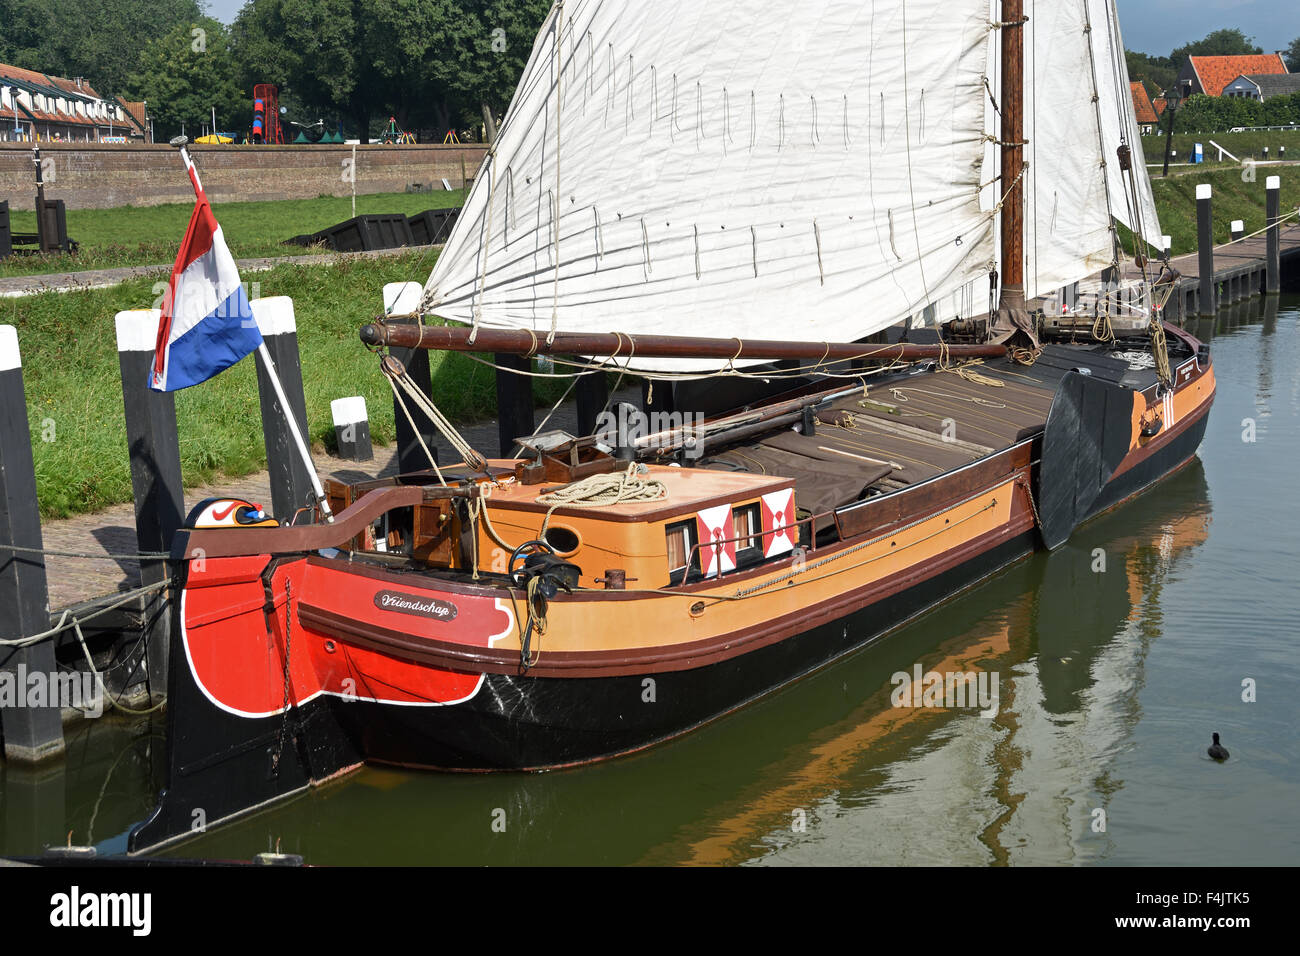 Zuiderzee Museum, Enkhuizen, Erhaltung des kulturellen Erbes - maritime Geschichte aus der alten Zuiderzee Region. Ijsselmeer, Niederlande Holland, Stockfoto